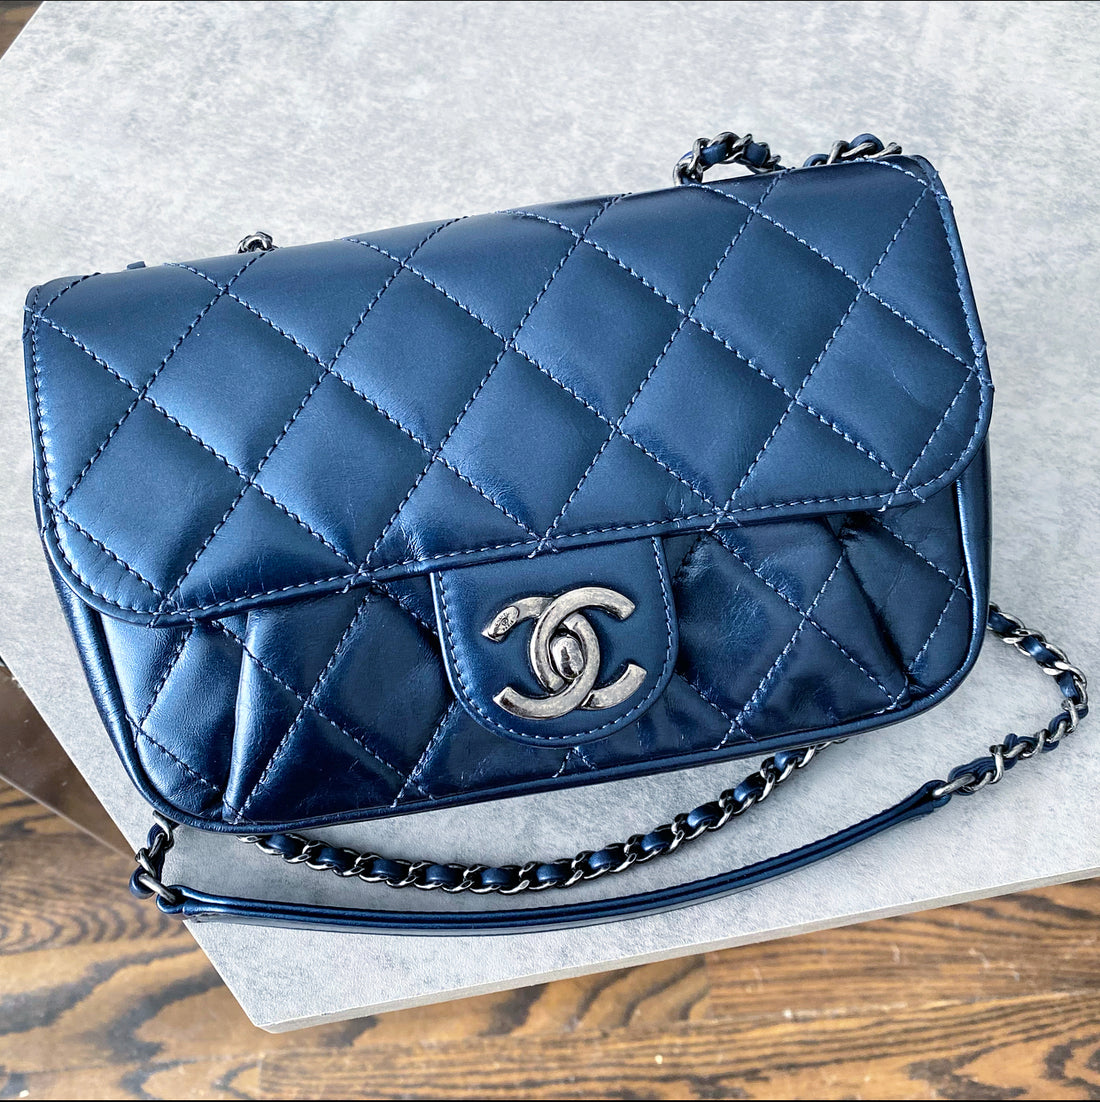 Chanel Metallic Navy Mini Coco Pleats Flap Bag – I MISS YOU VINTAGE